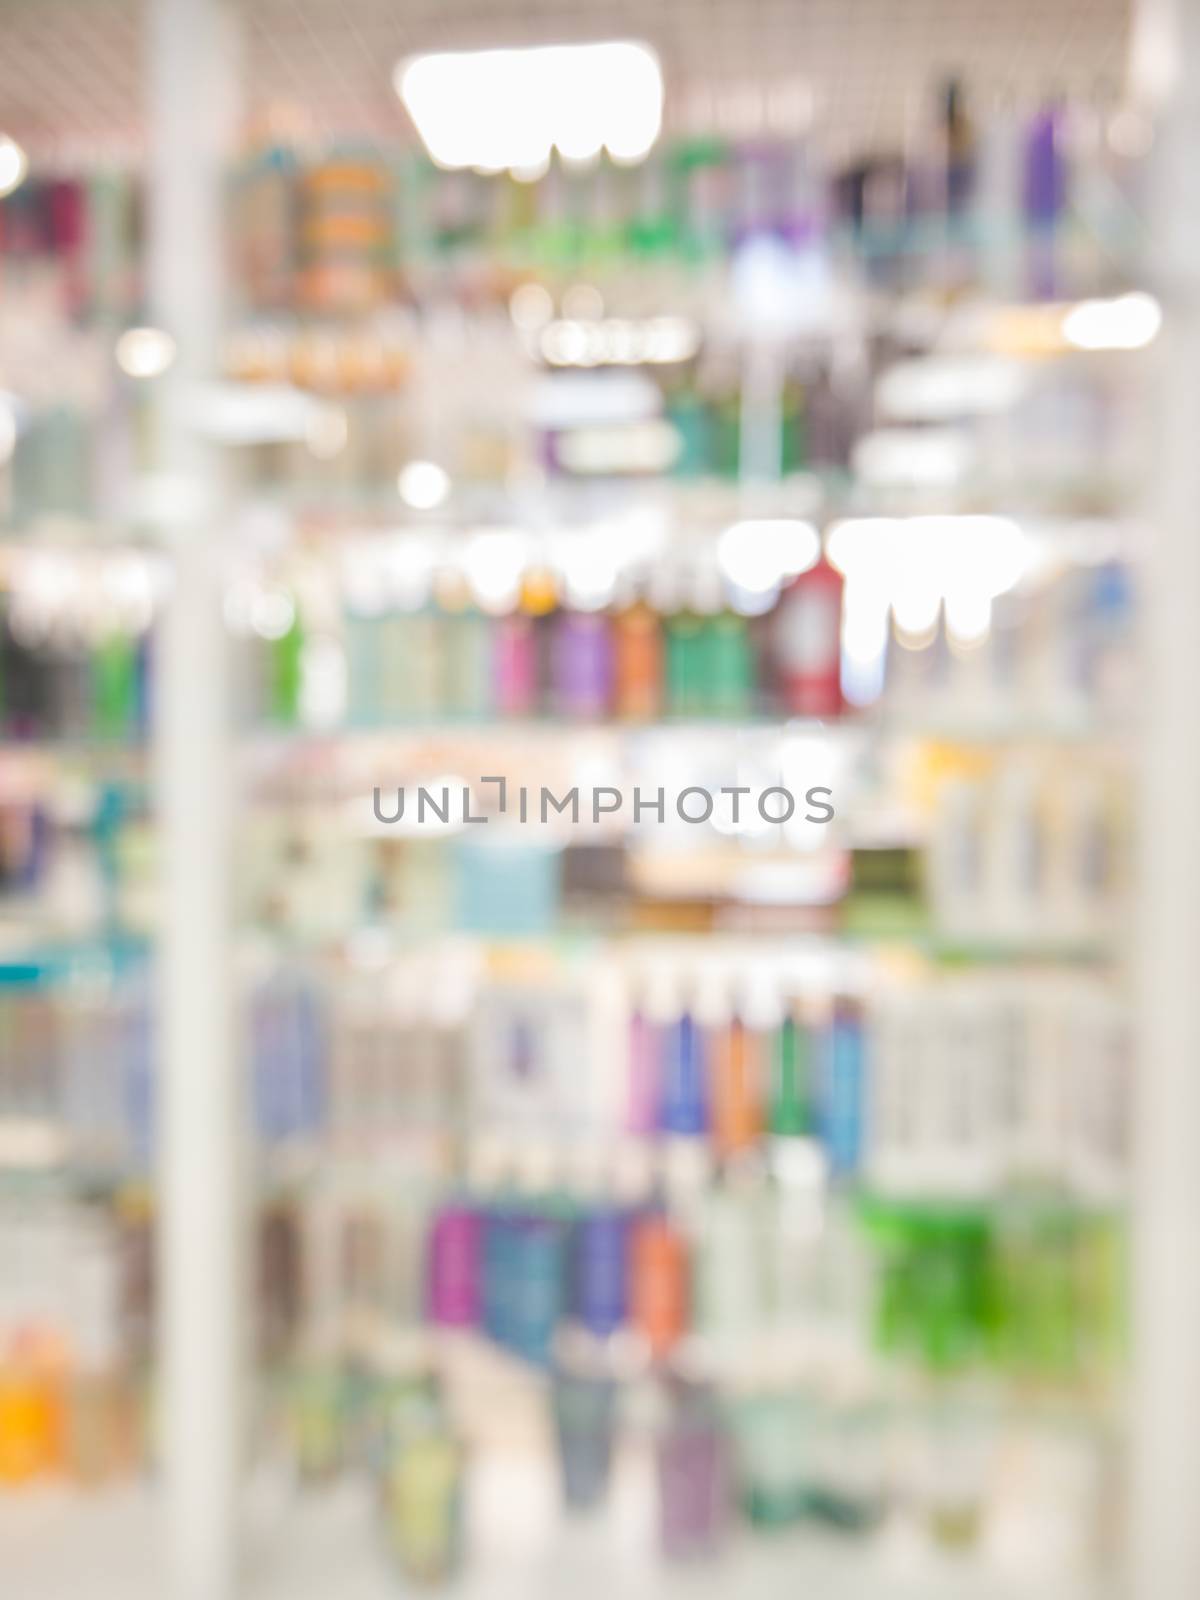 Blurred colorful supermarket products on shelves - Shampoo bottles background